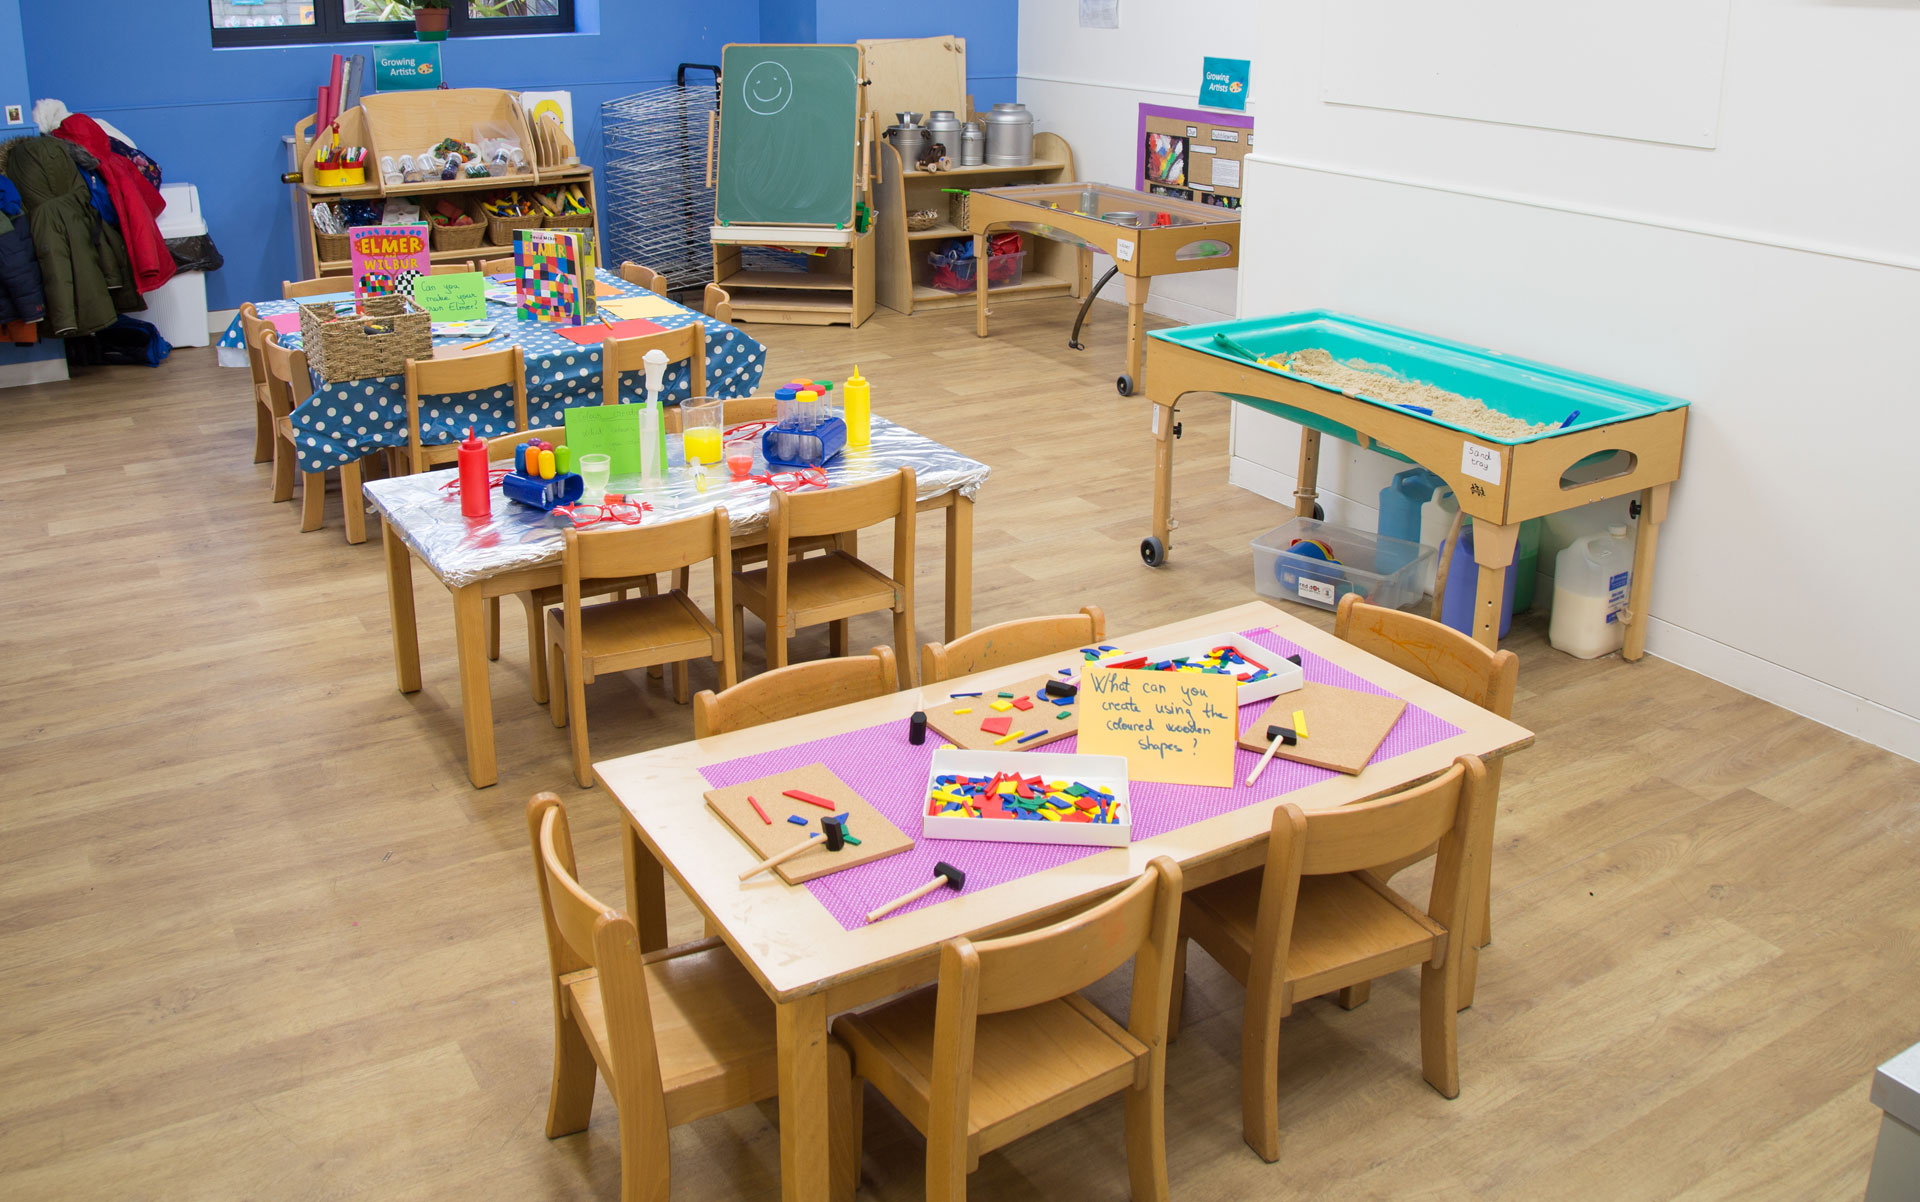 East Barnet Day Nursery and Preschool